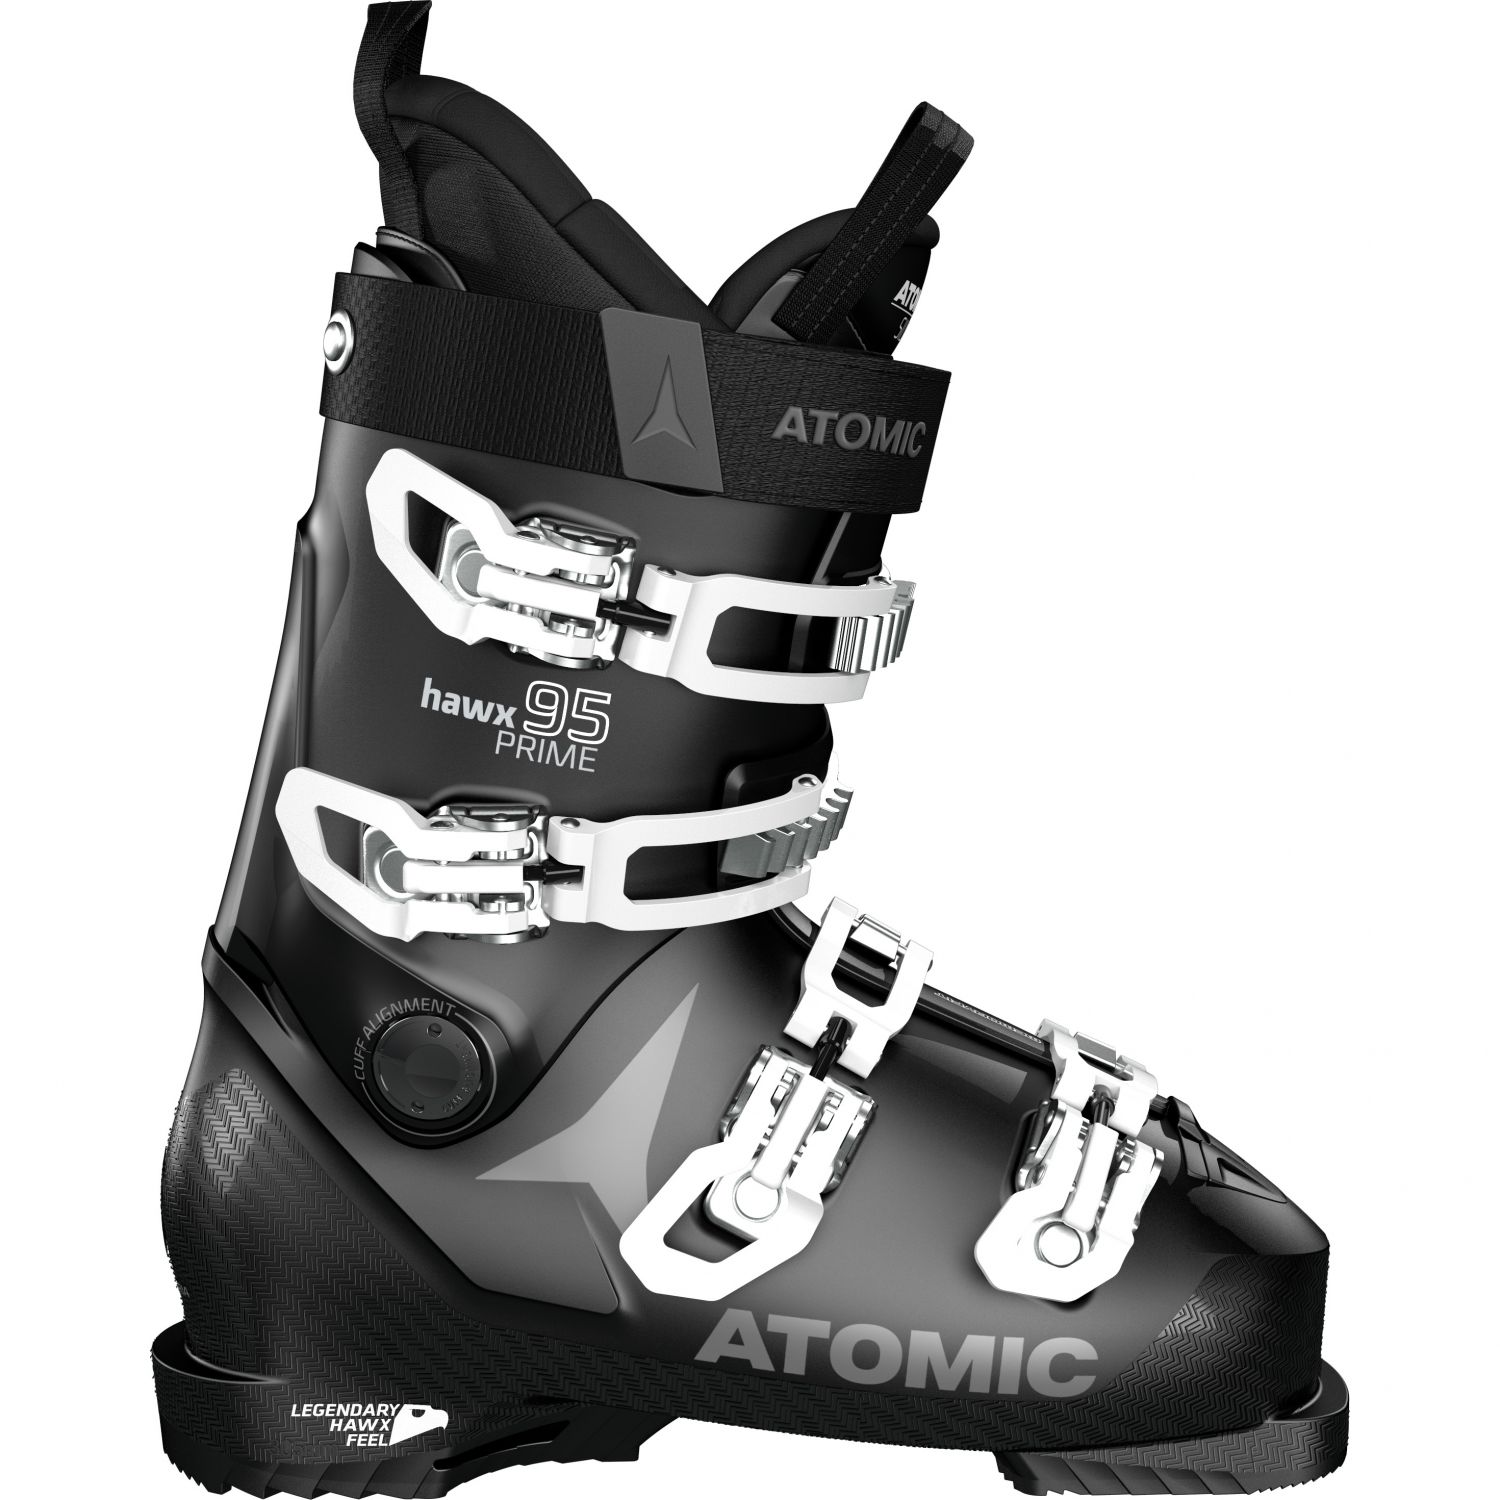 Atomic Hawx Prime 95 AM W, boots, black